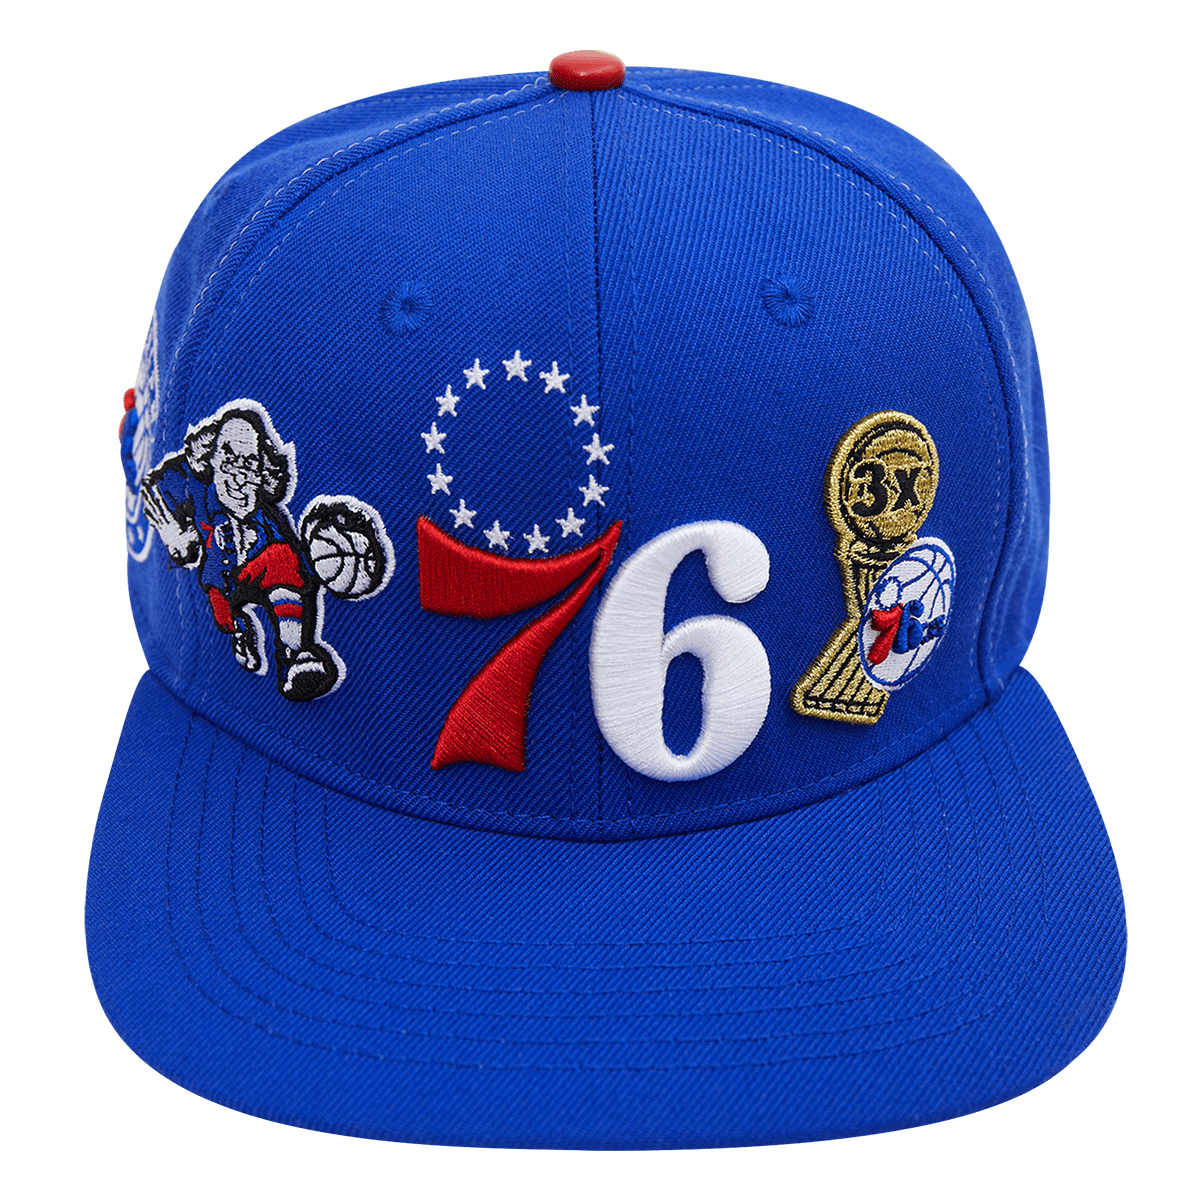 NBA PHILADELPHIA 76ERS CITY DOUBLE FRONT LOGO UNISEX SNAPBACK HAT (ROYAL BLUE)